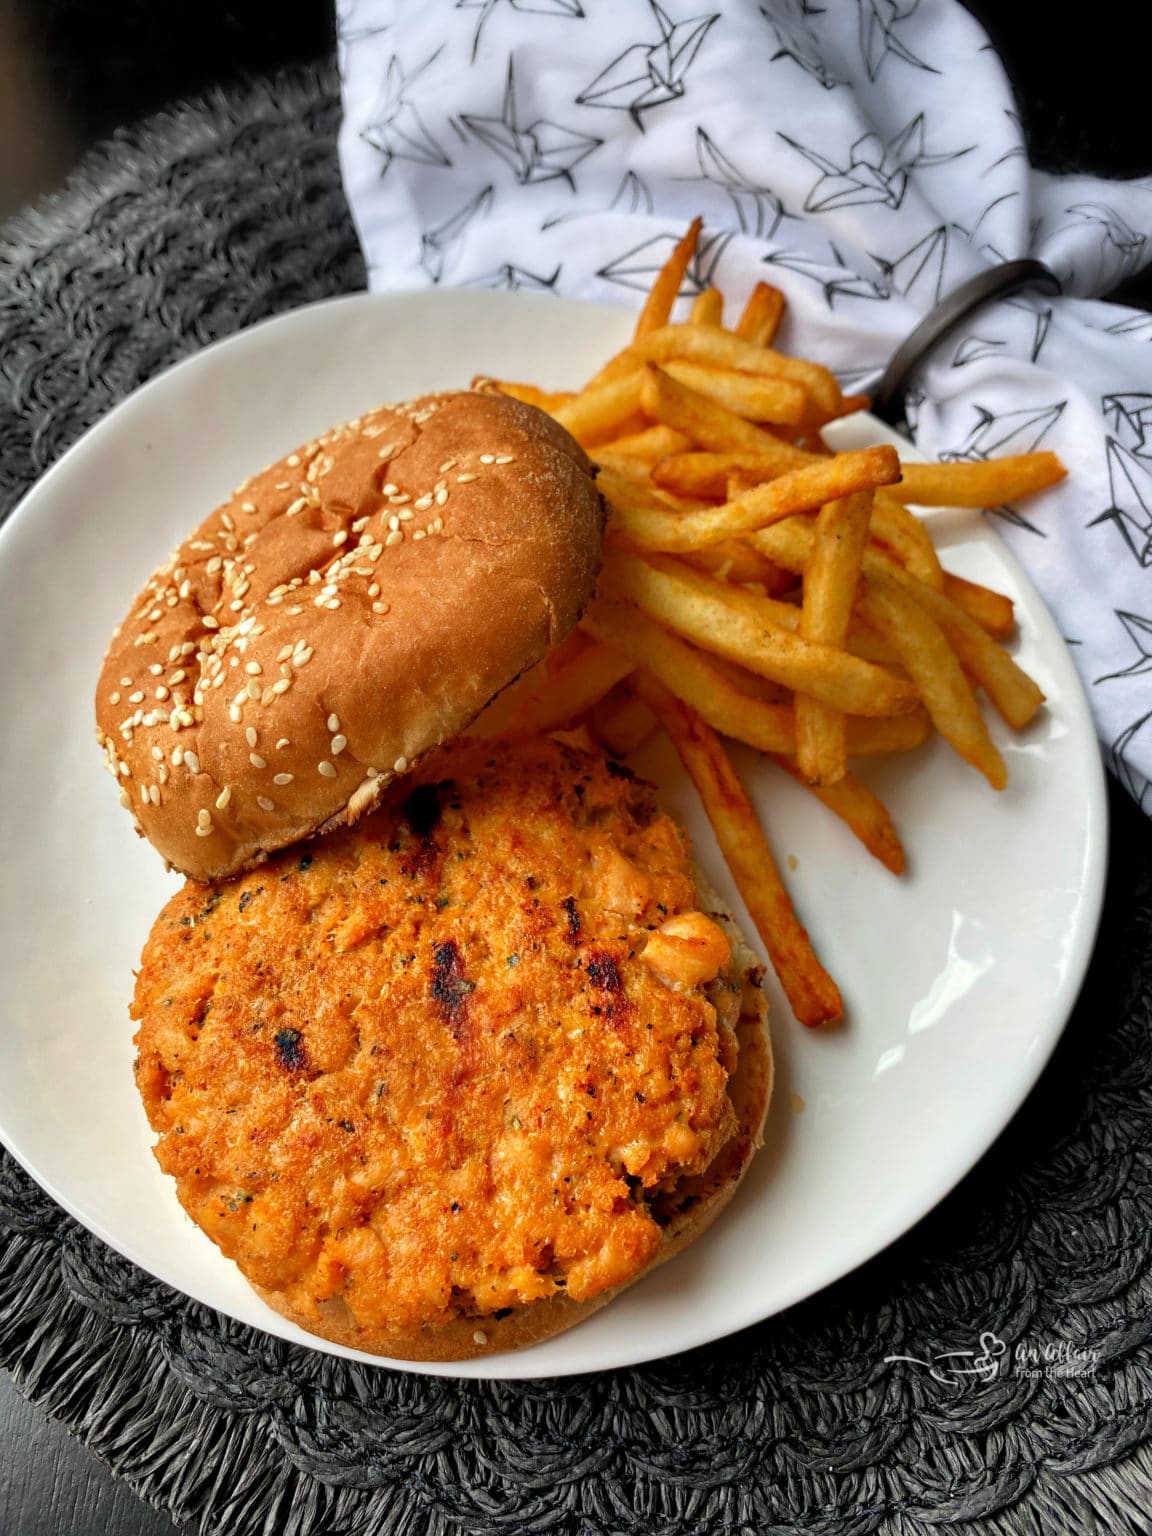 Blackened Salmon Burgers with BLT Slaw - A Tasty Meatless Burger